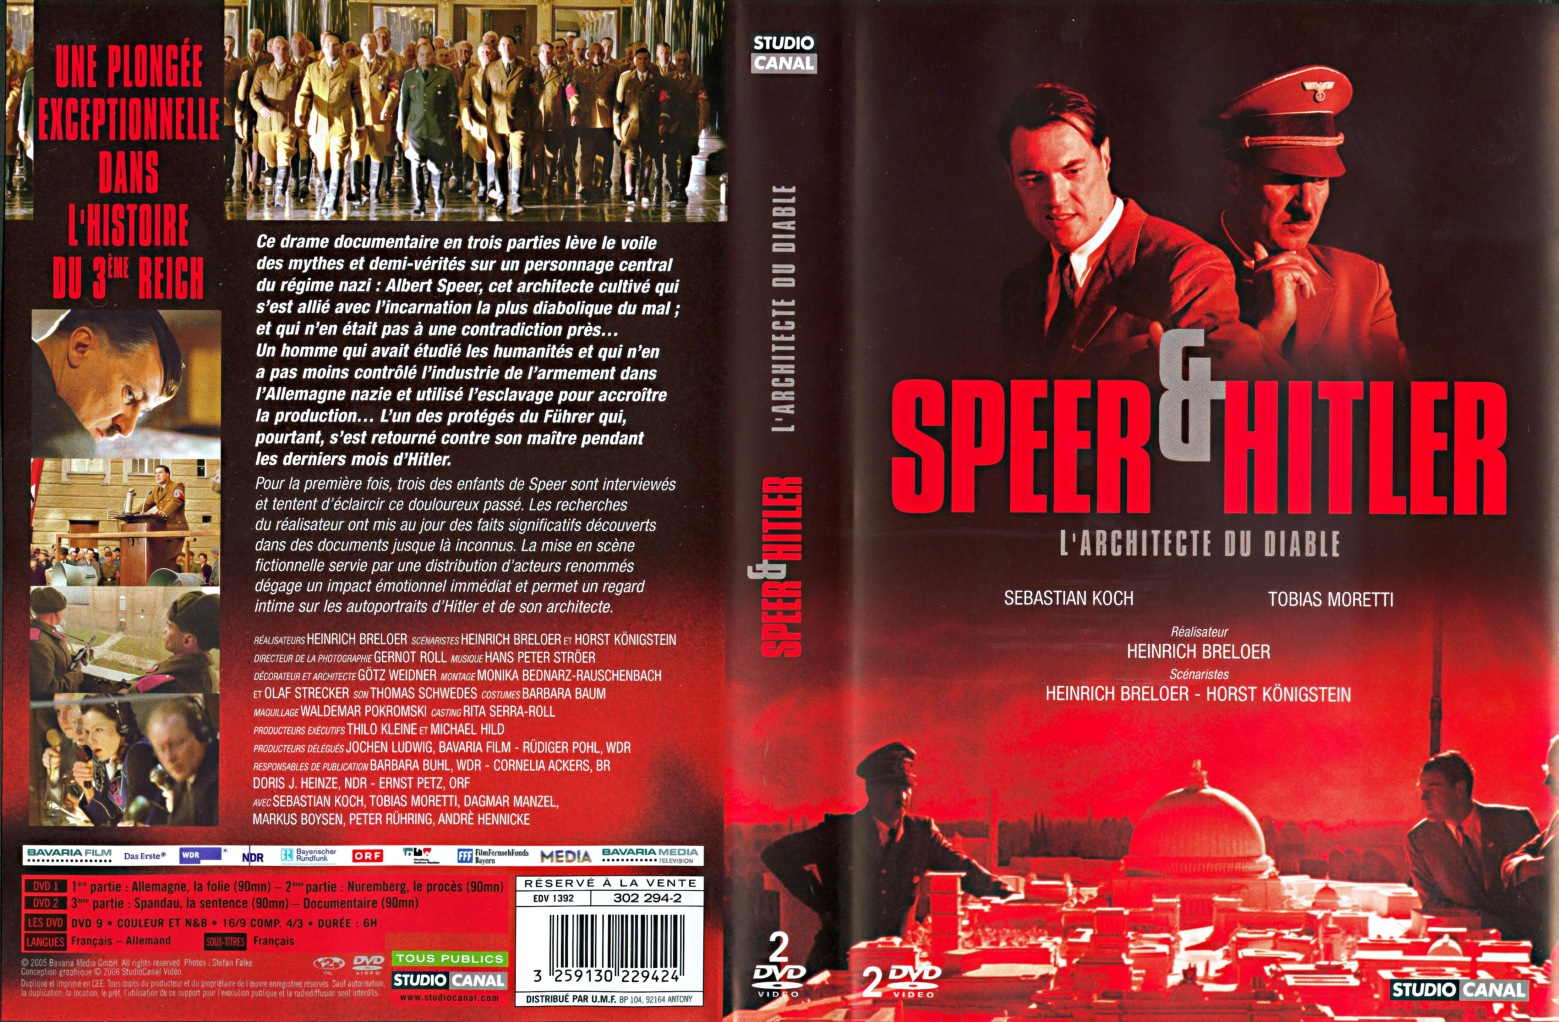 Jaquette DVD Speer et Hitler